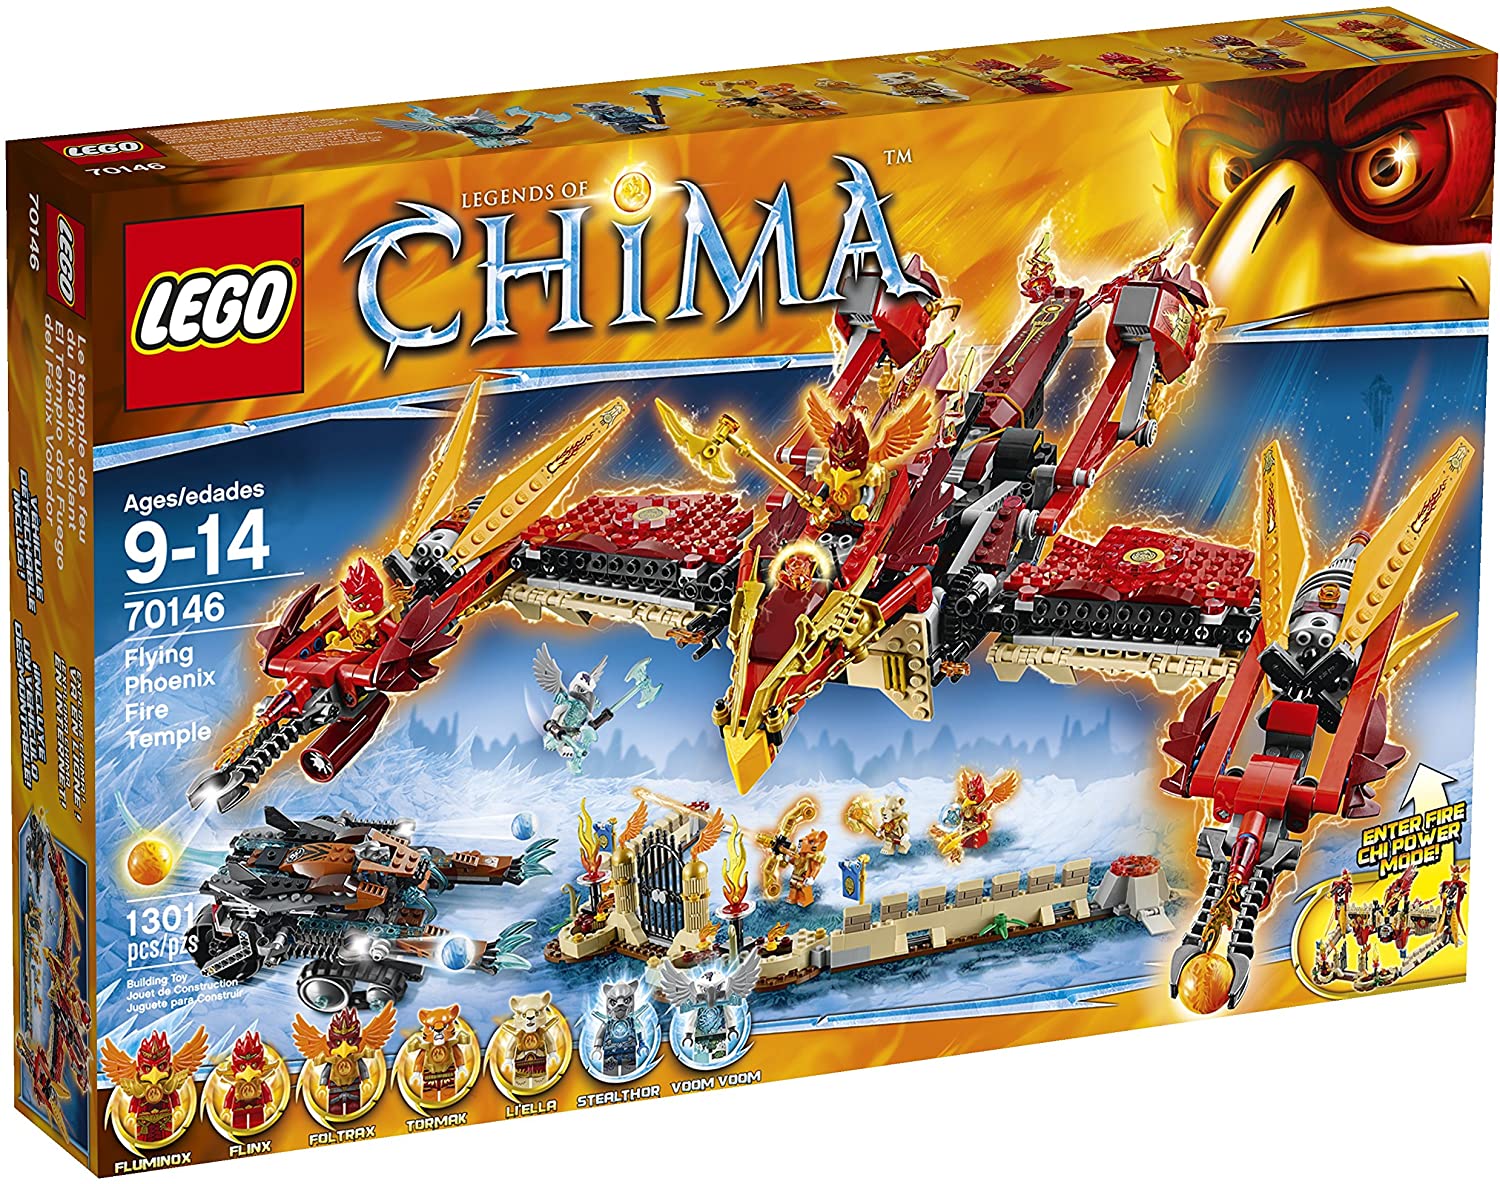 70146 Flying Phoenix Fire Temple LEGO Legends of Chima |